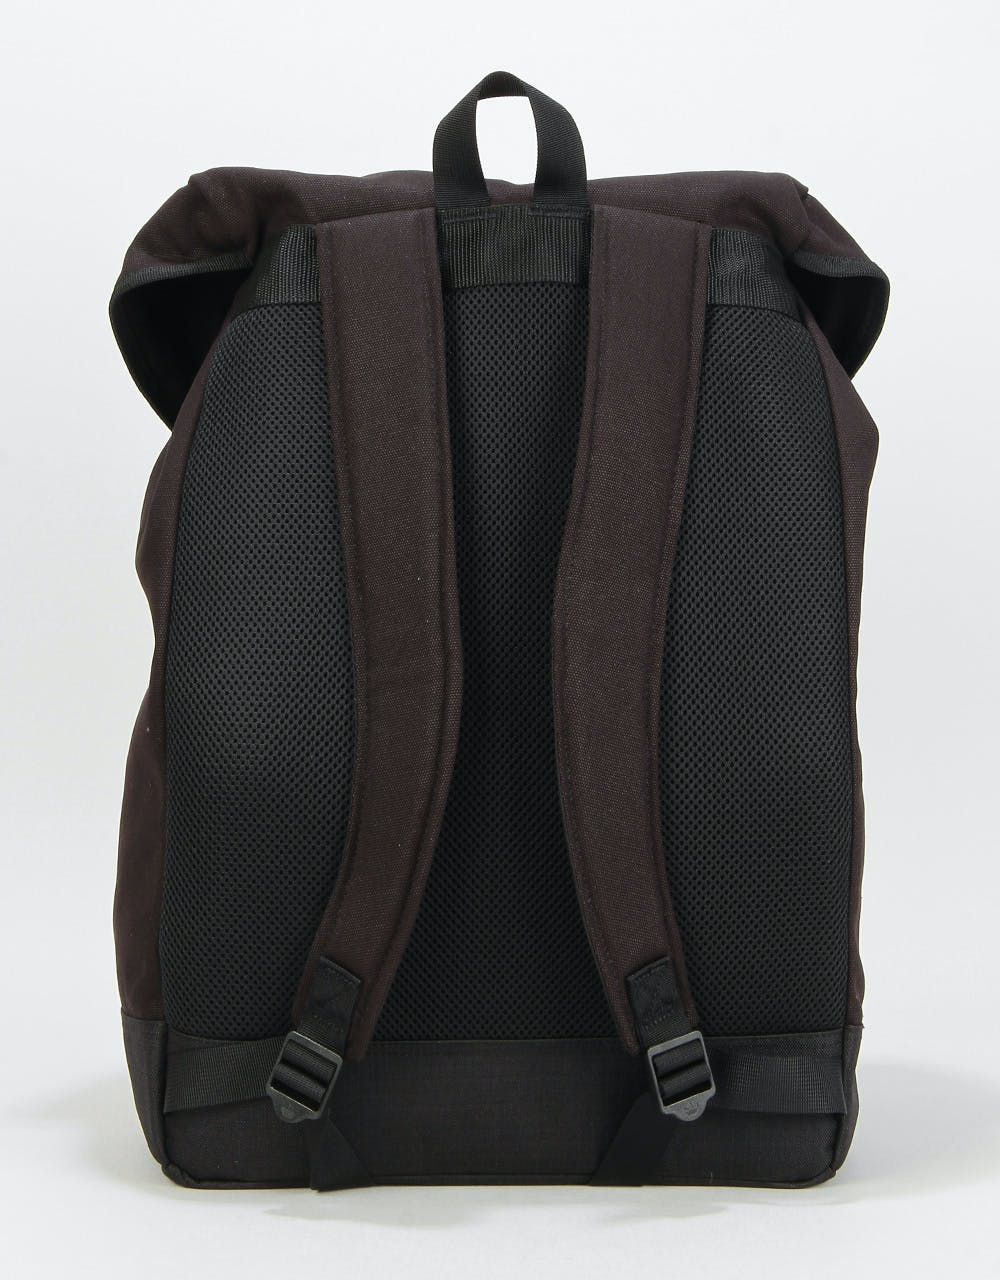 Adidas Sombras Backpack - Multicolor/Black/White/Active Orange